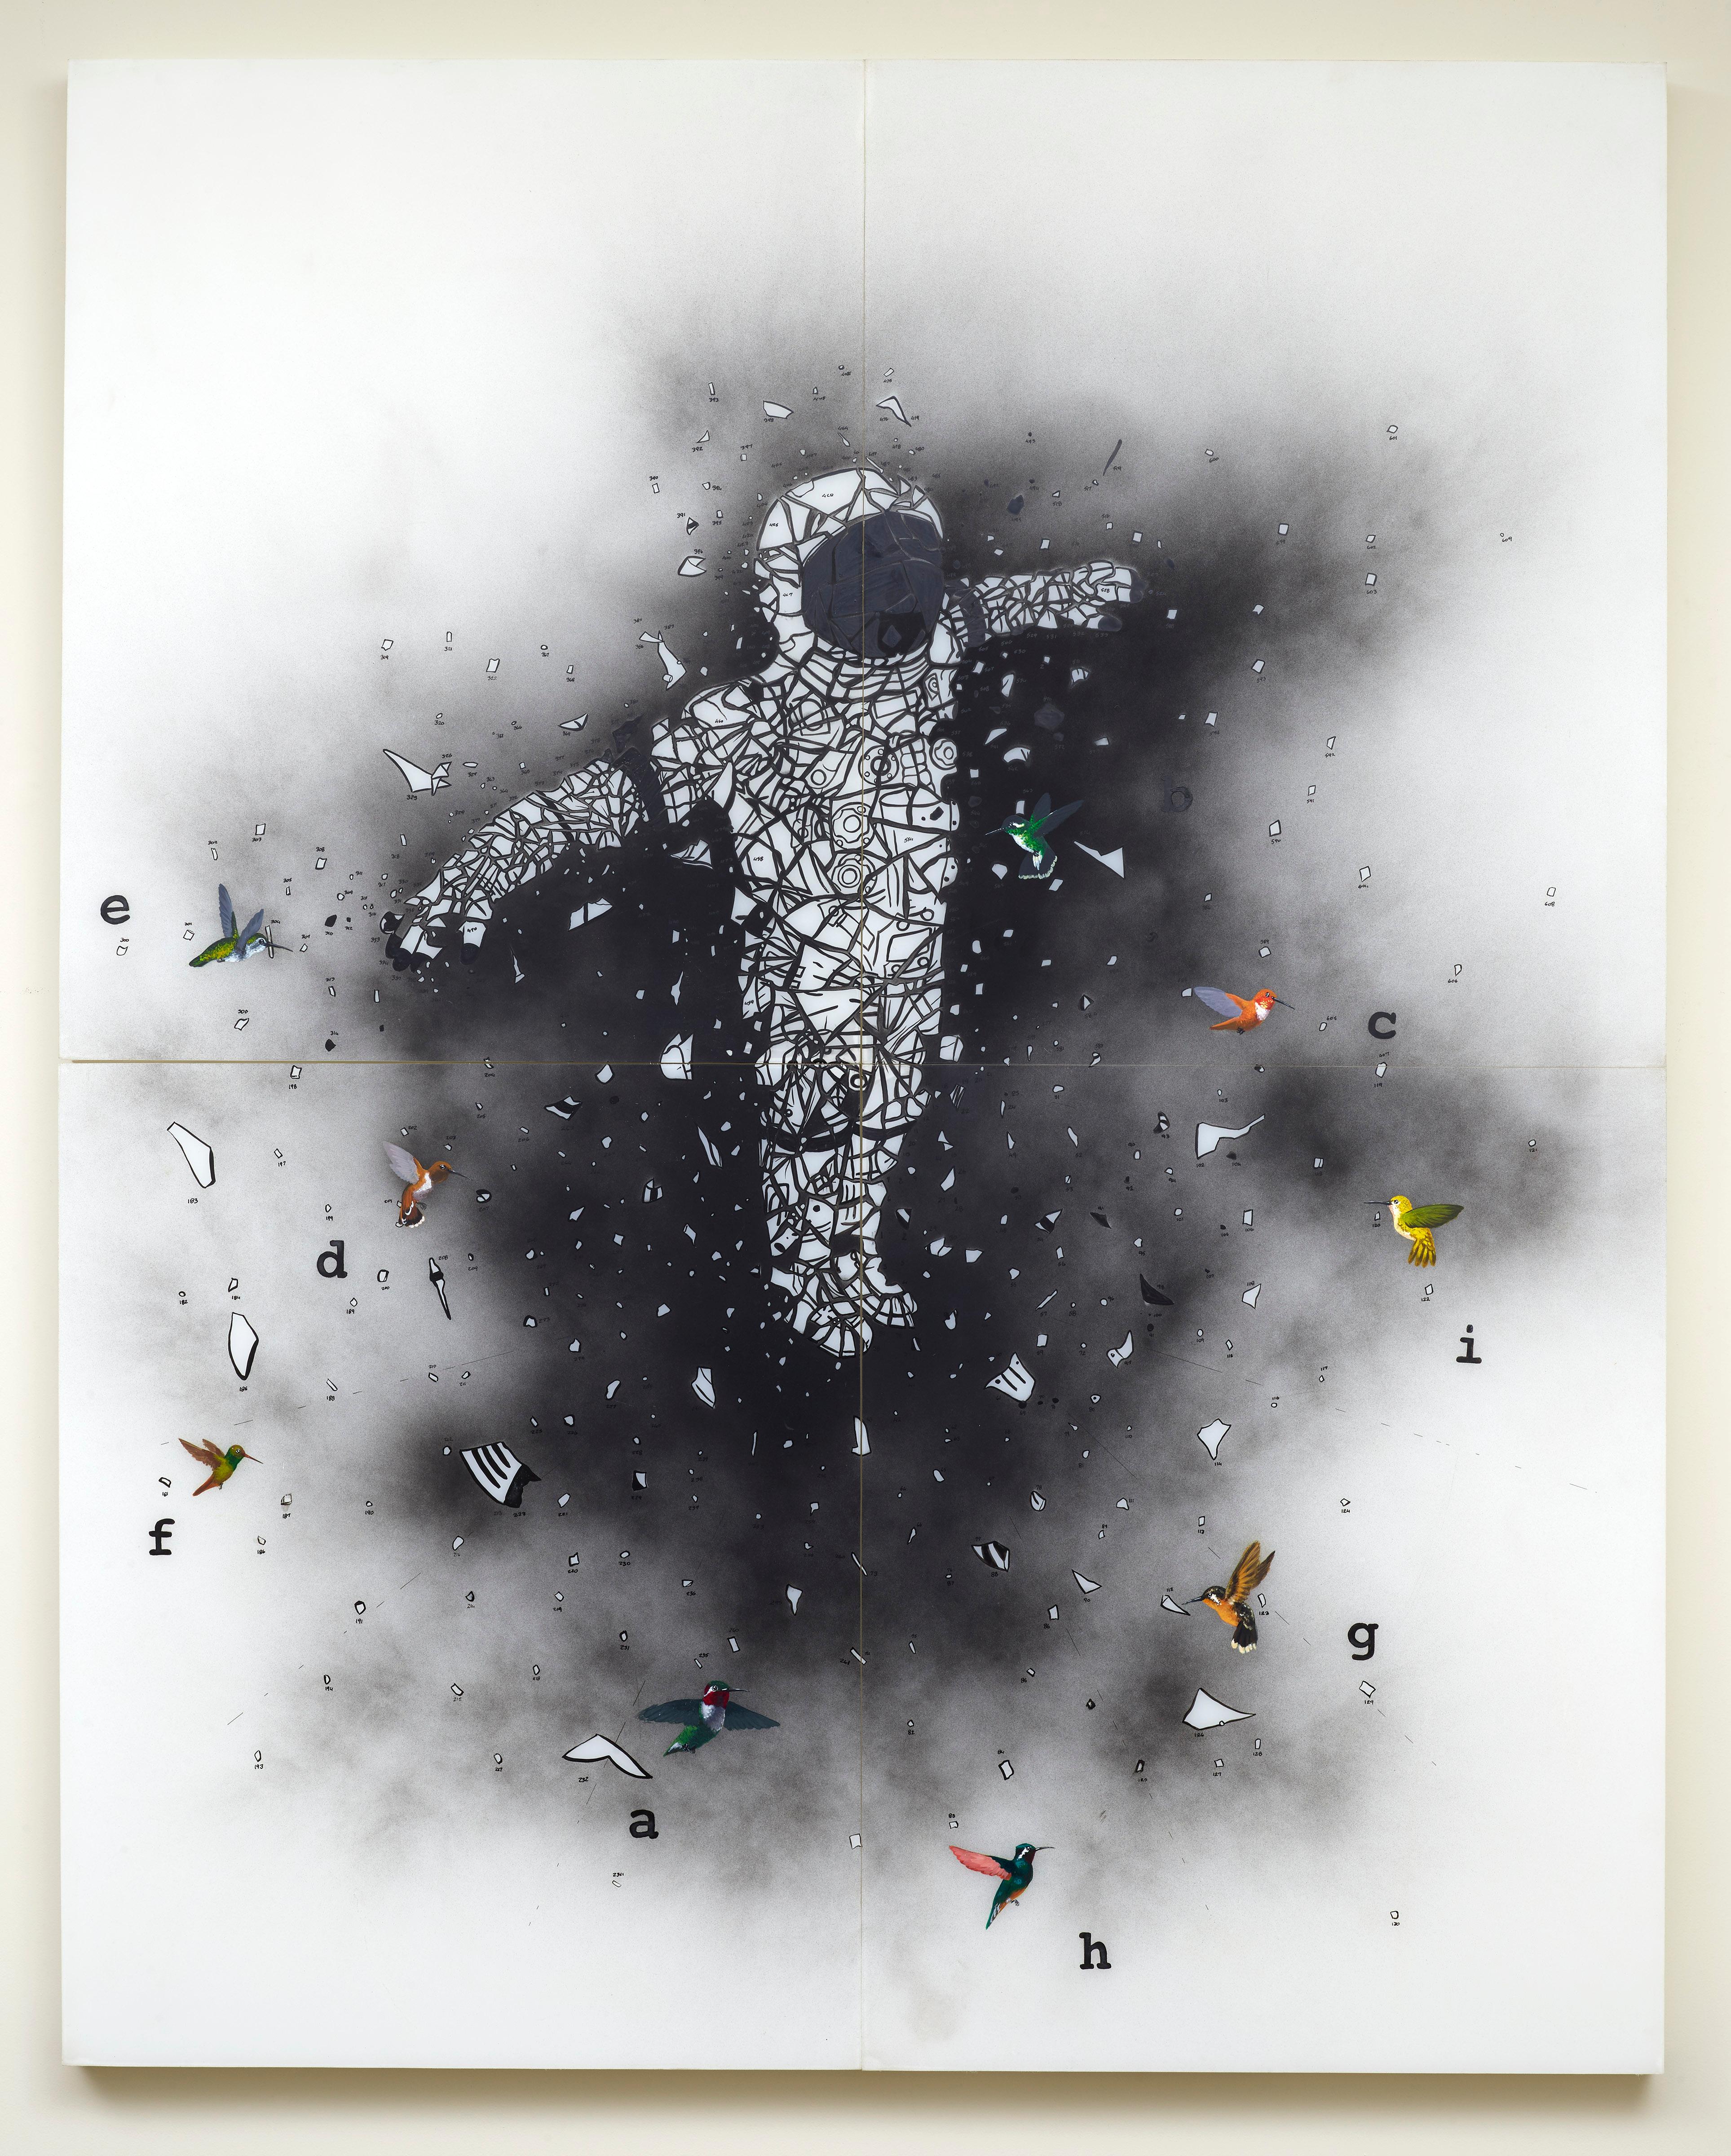 Tavares Strachan Figurative Art - "Expanded - Exploded" 4 piece artwork on mylar